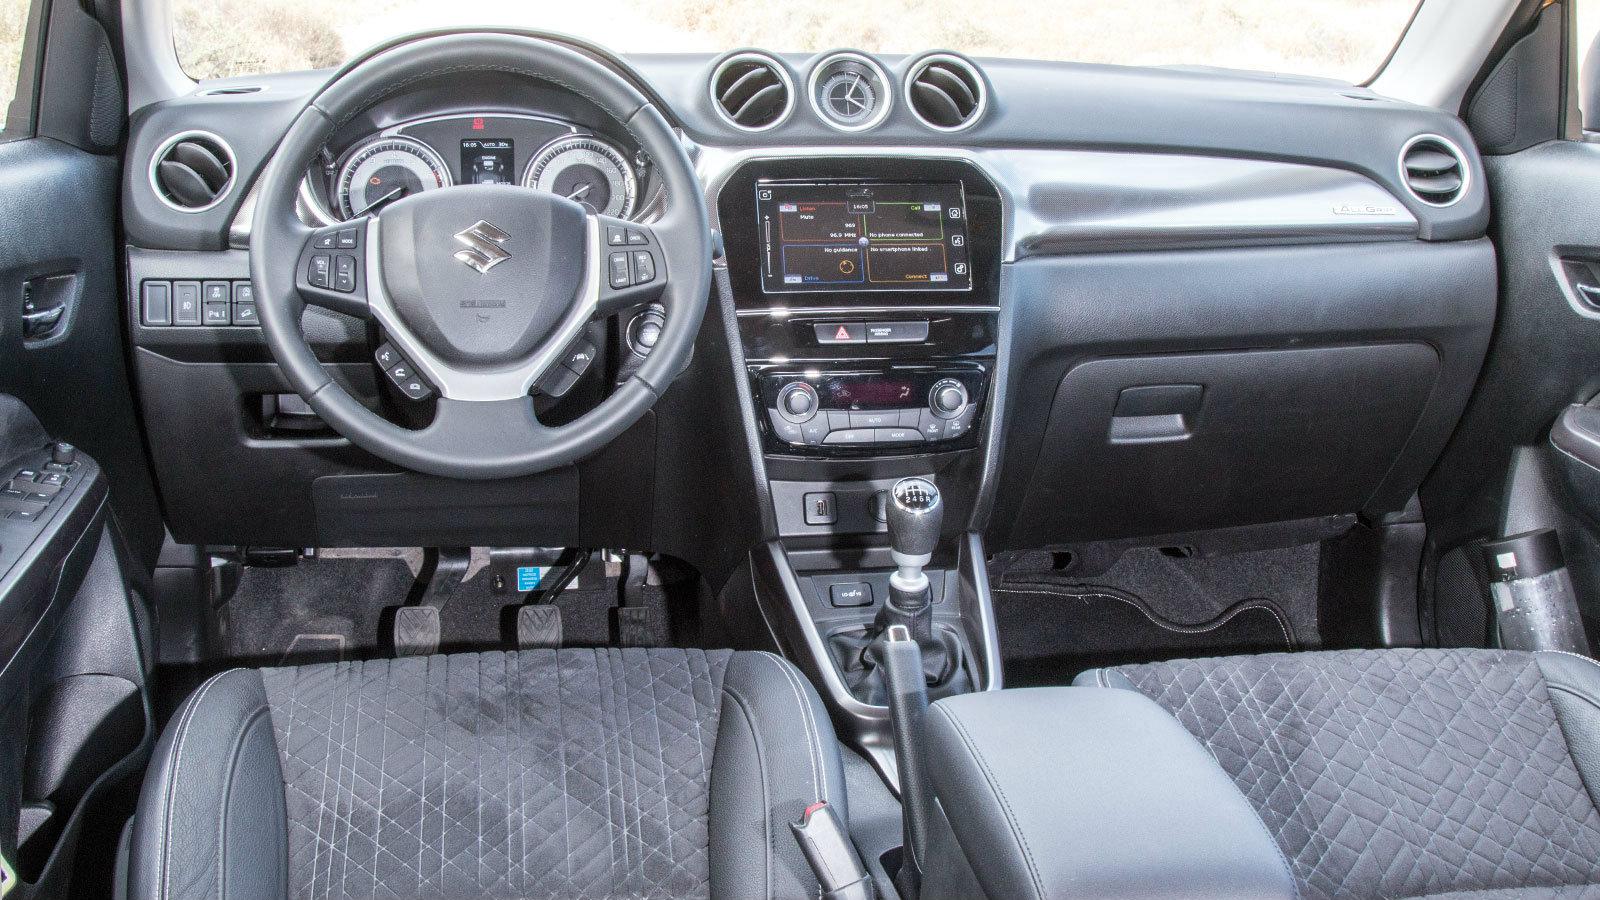 Seat Arona 110ps VS Suzuki Vitara 129ps. Ποιο ξεχωρίζει σε εξοπλισμό ασφαλείας και άνεσης;